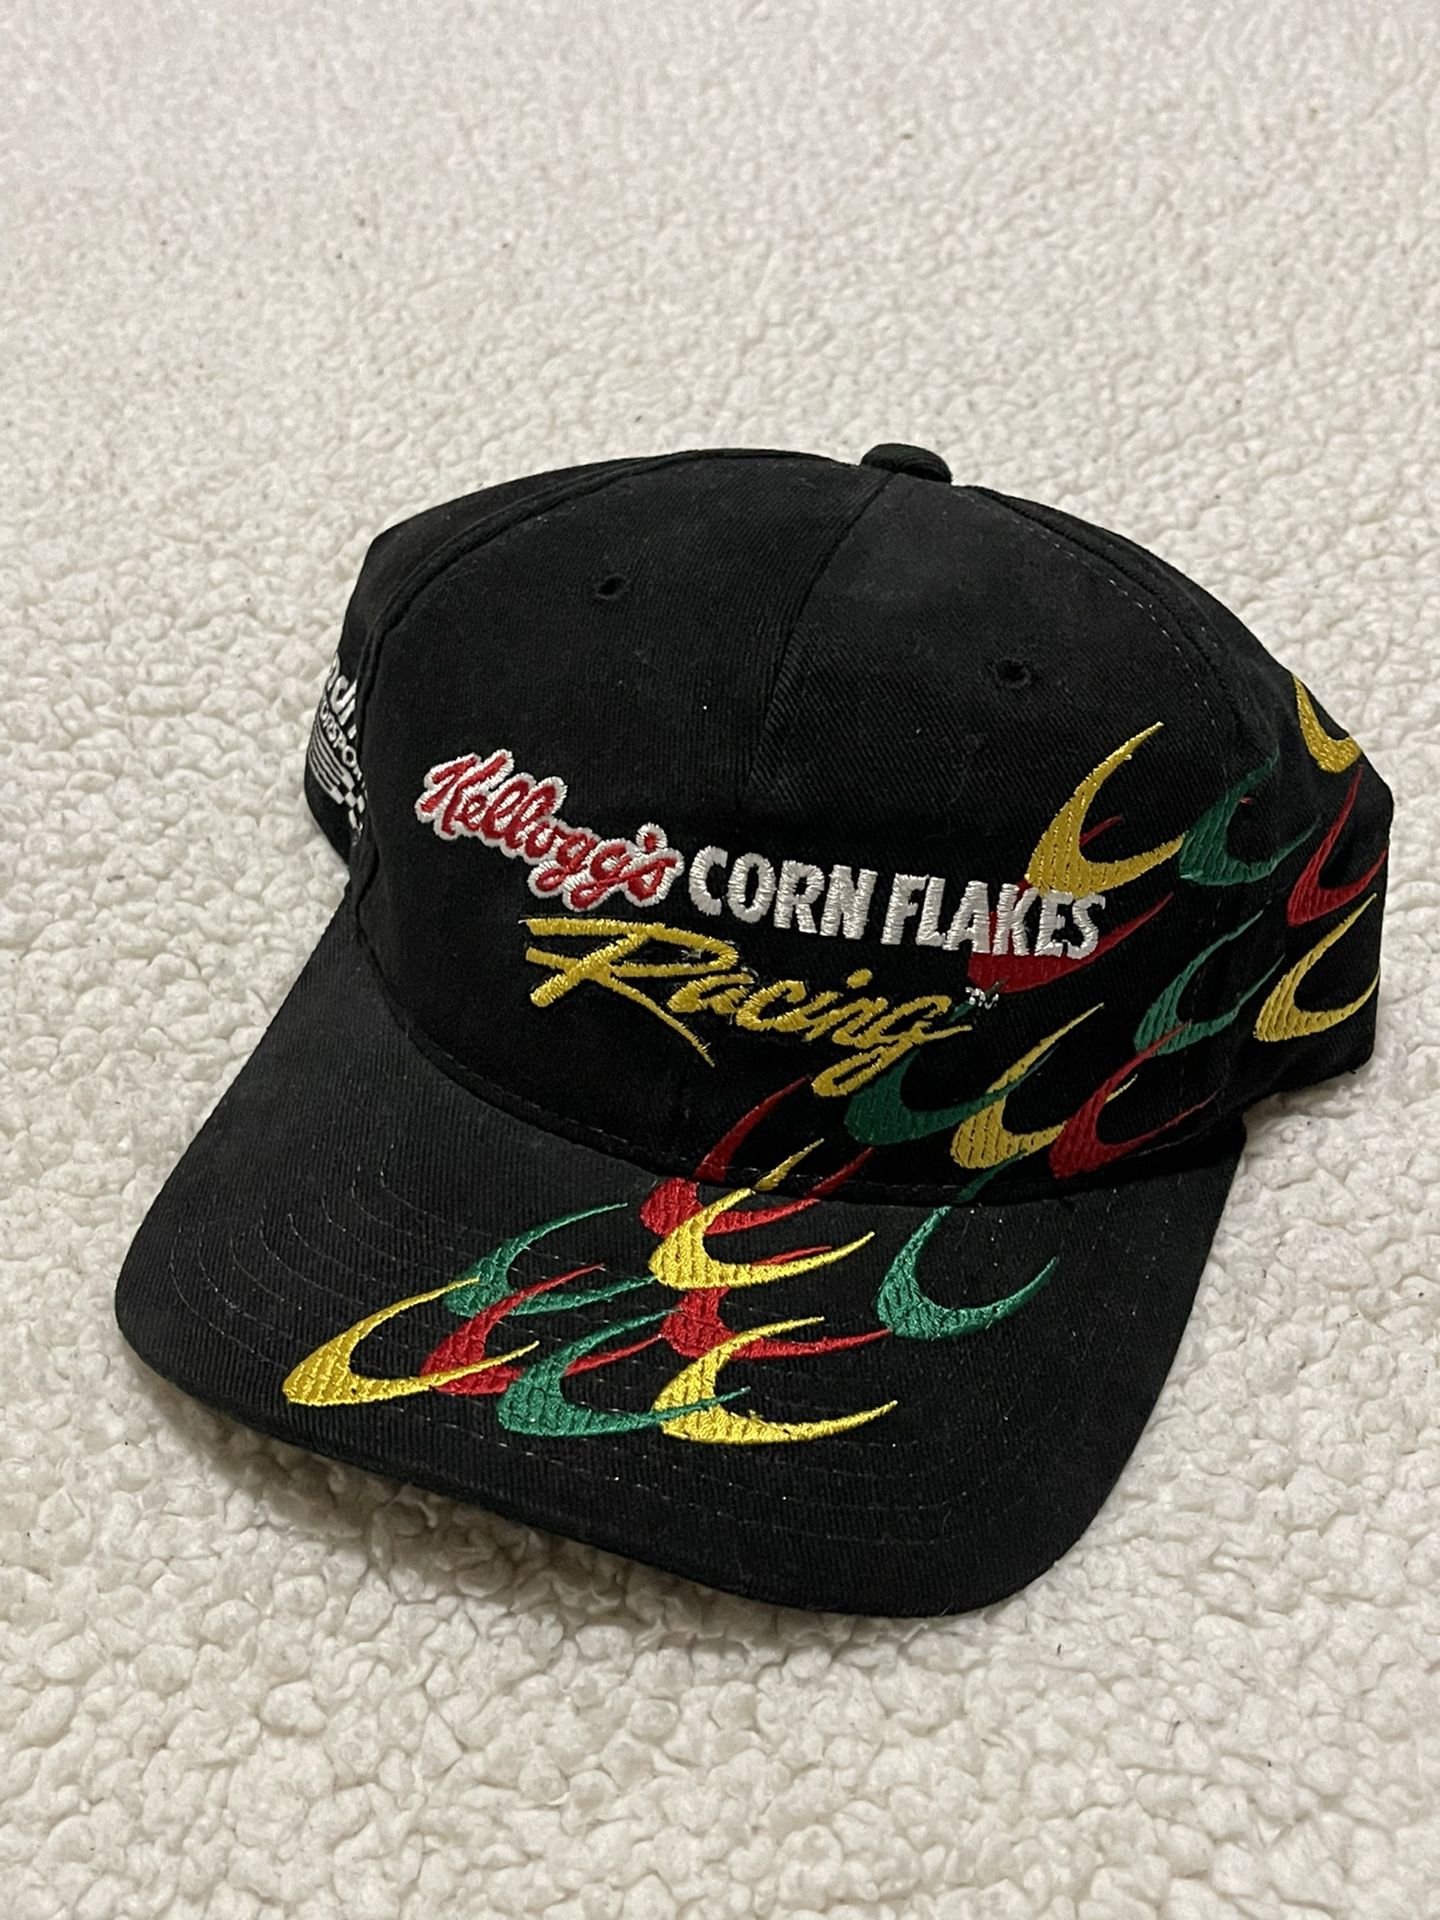 Vintage NWT Kellogg’s Corn Flakes NASCAR Racing Snapback Hat Terry Labonte Chase